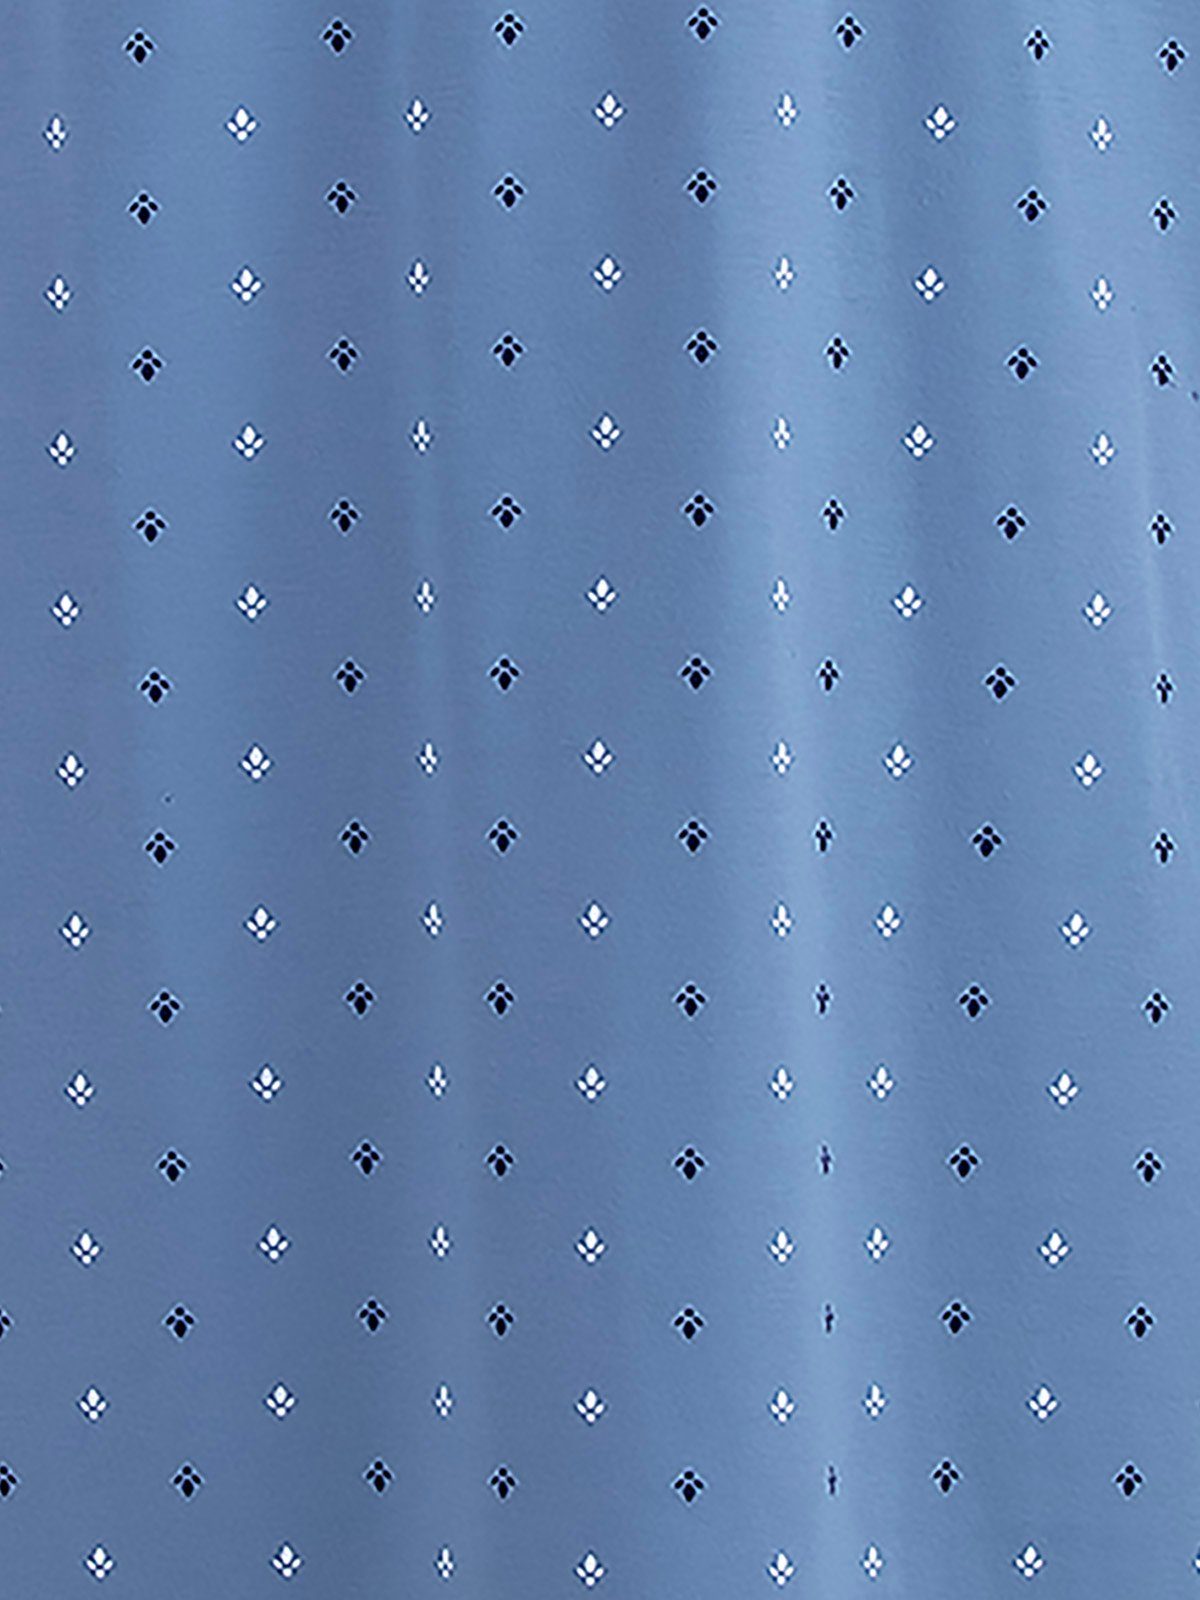 Terre Blatt Nachthemd Nachthemd Henry Kurzarm - blau